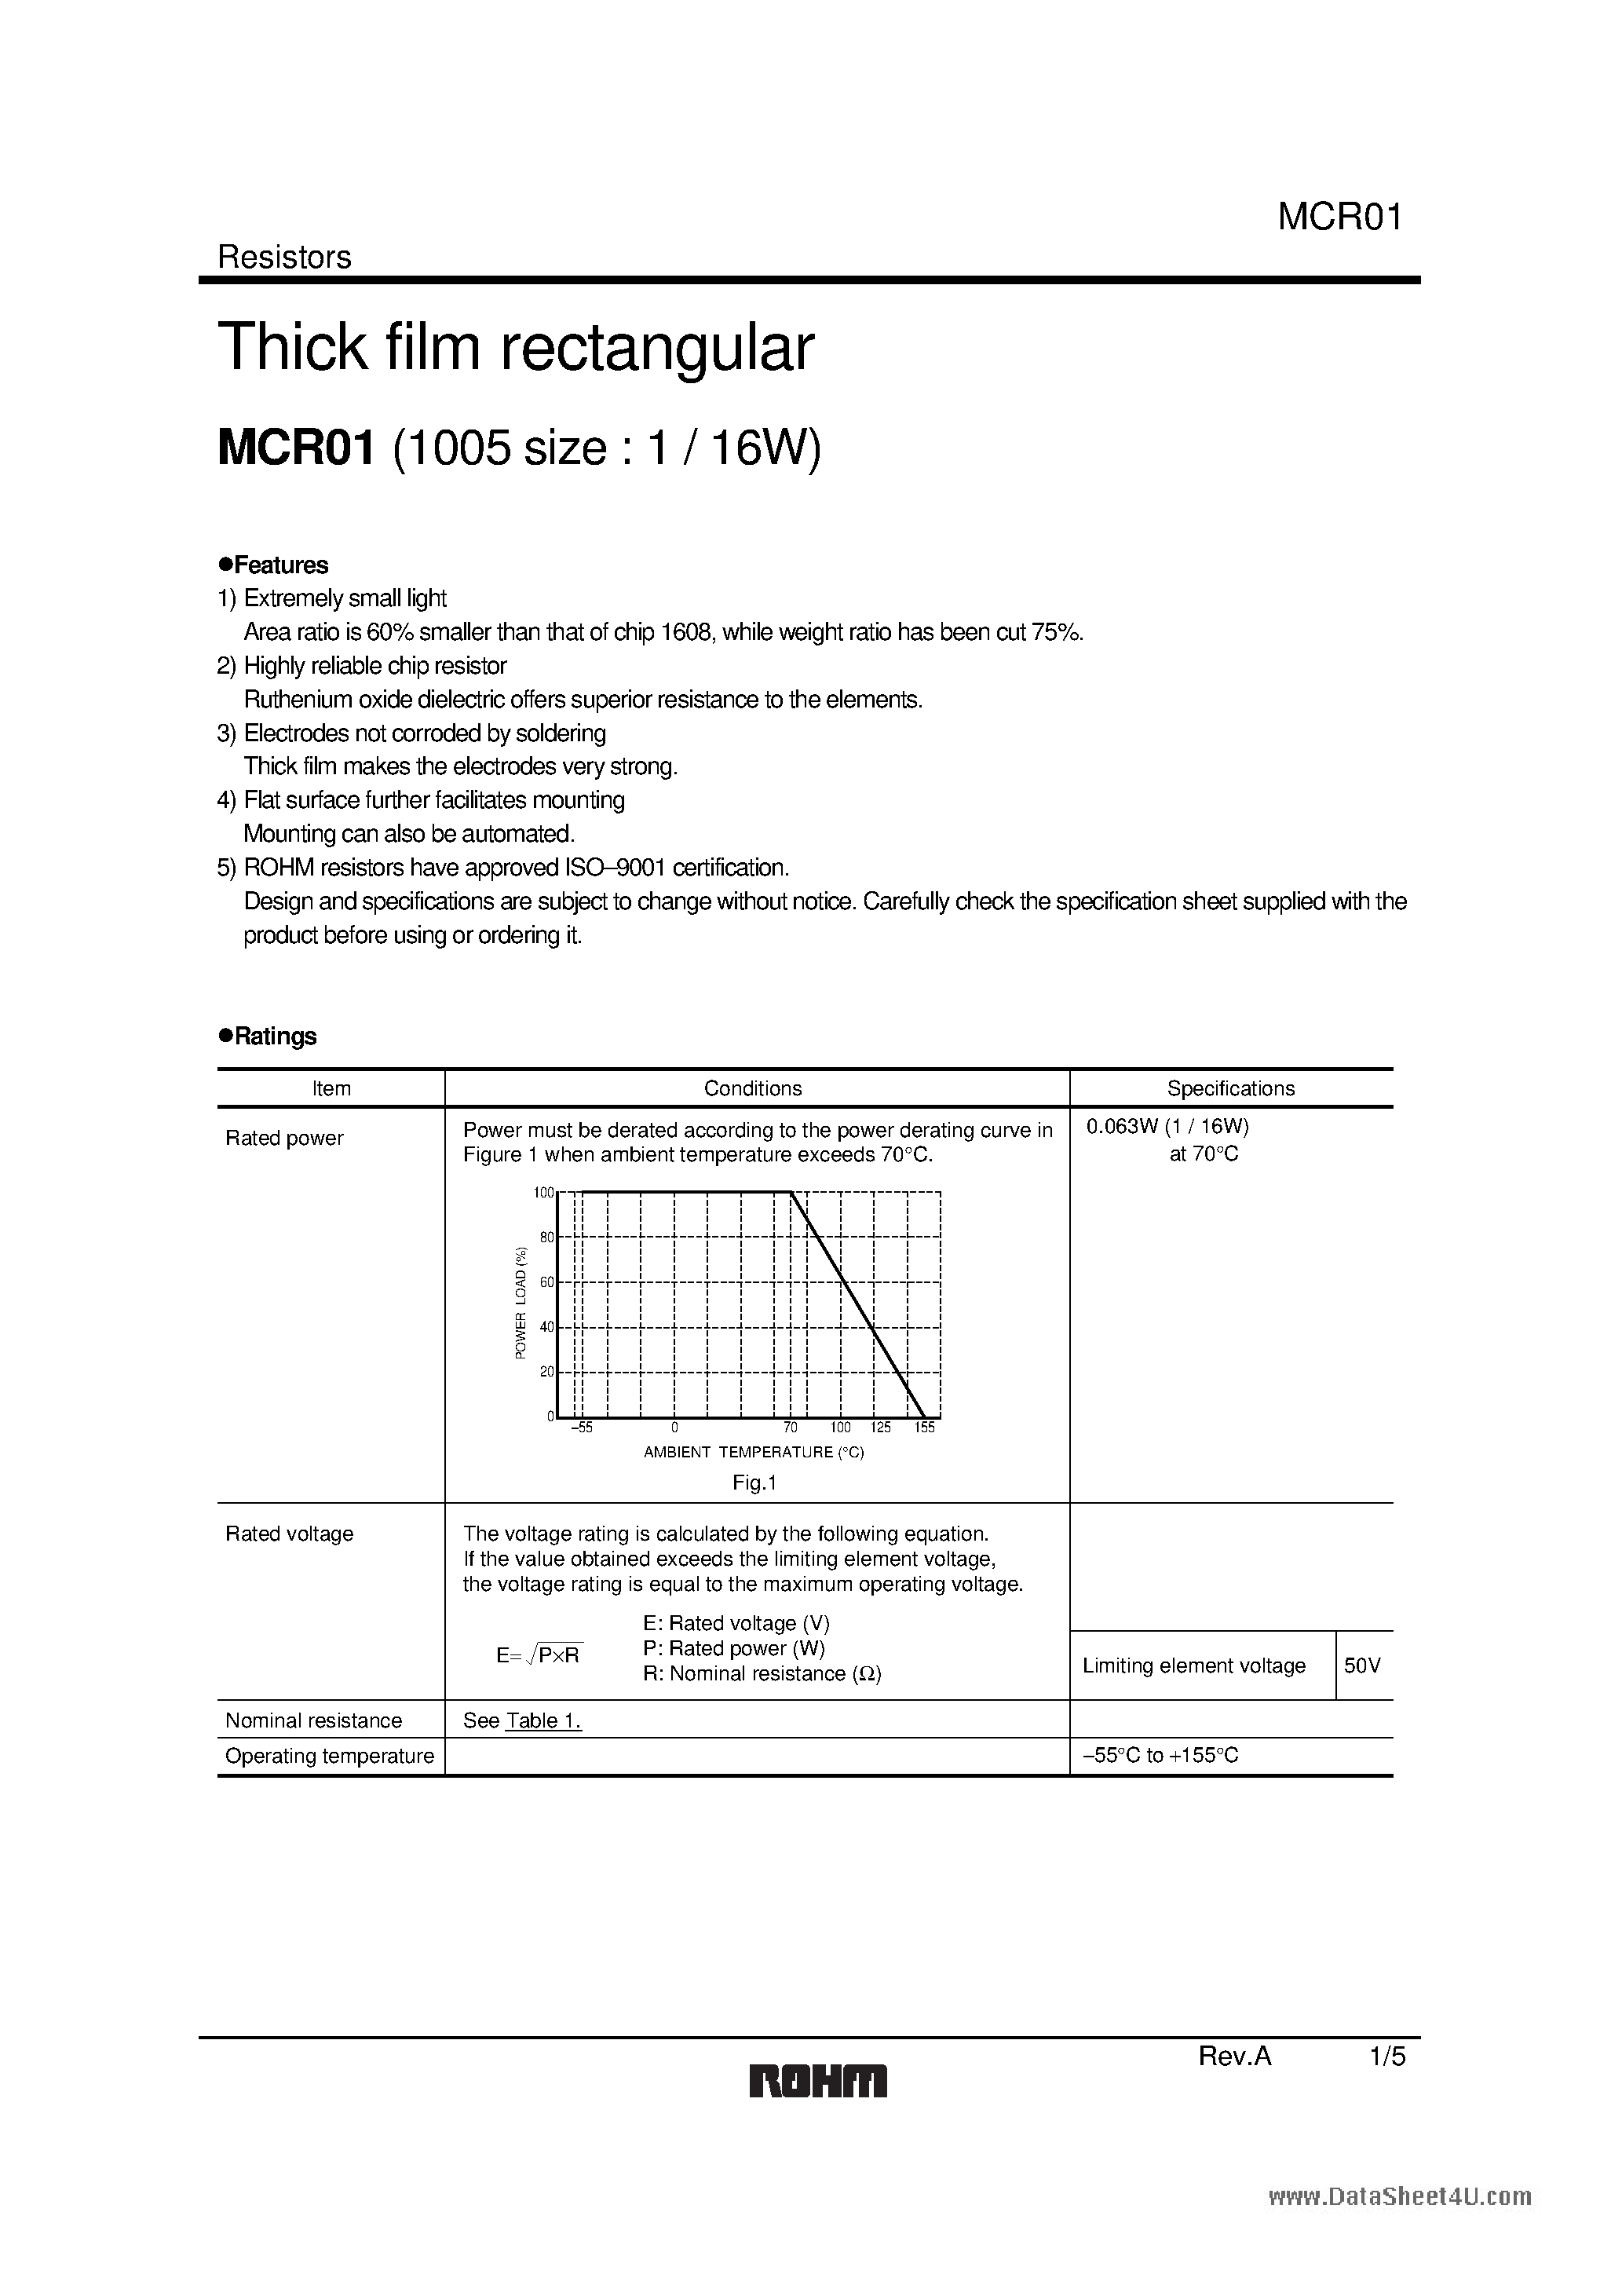 Даташит MCR01 - Thick film rectangular страница 1